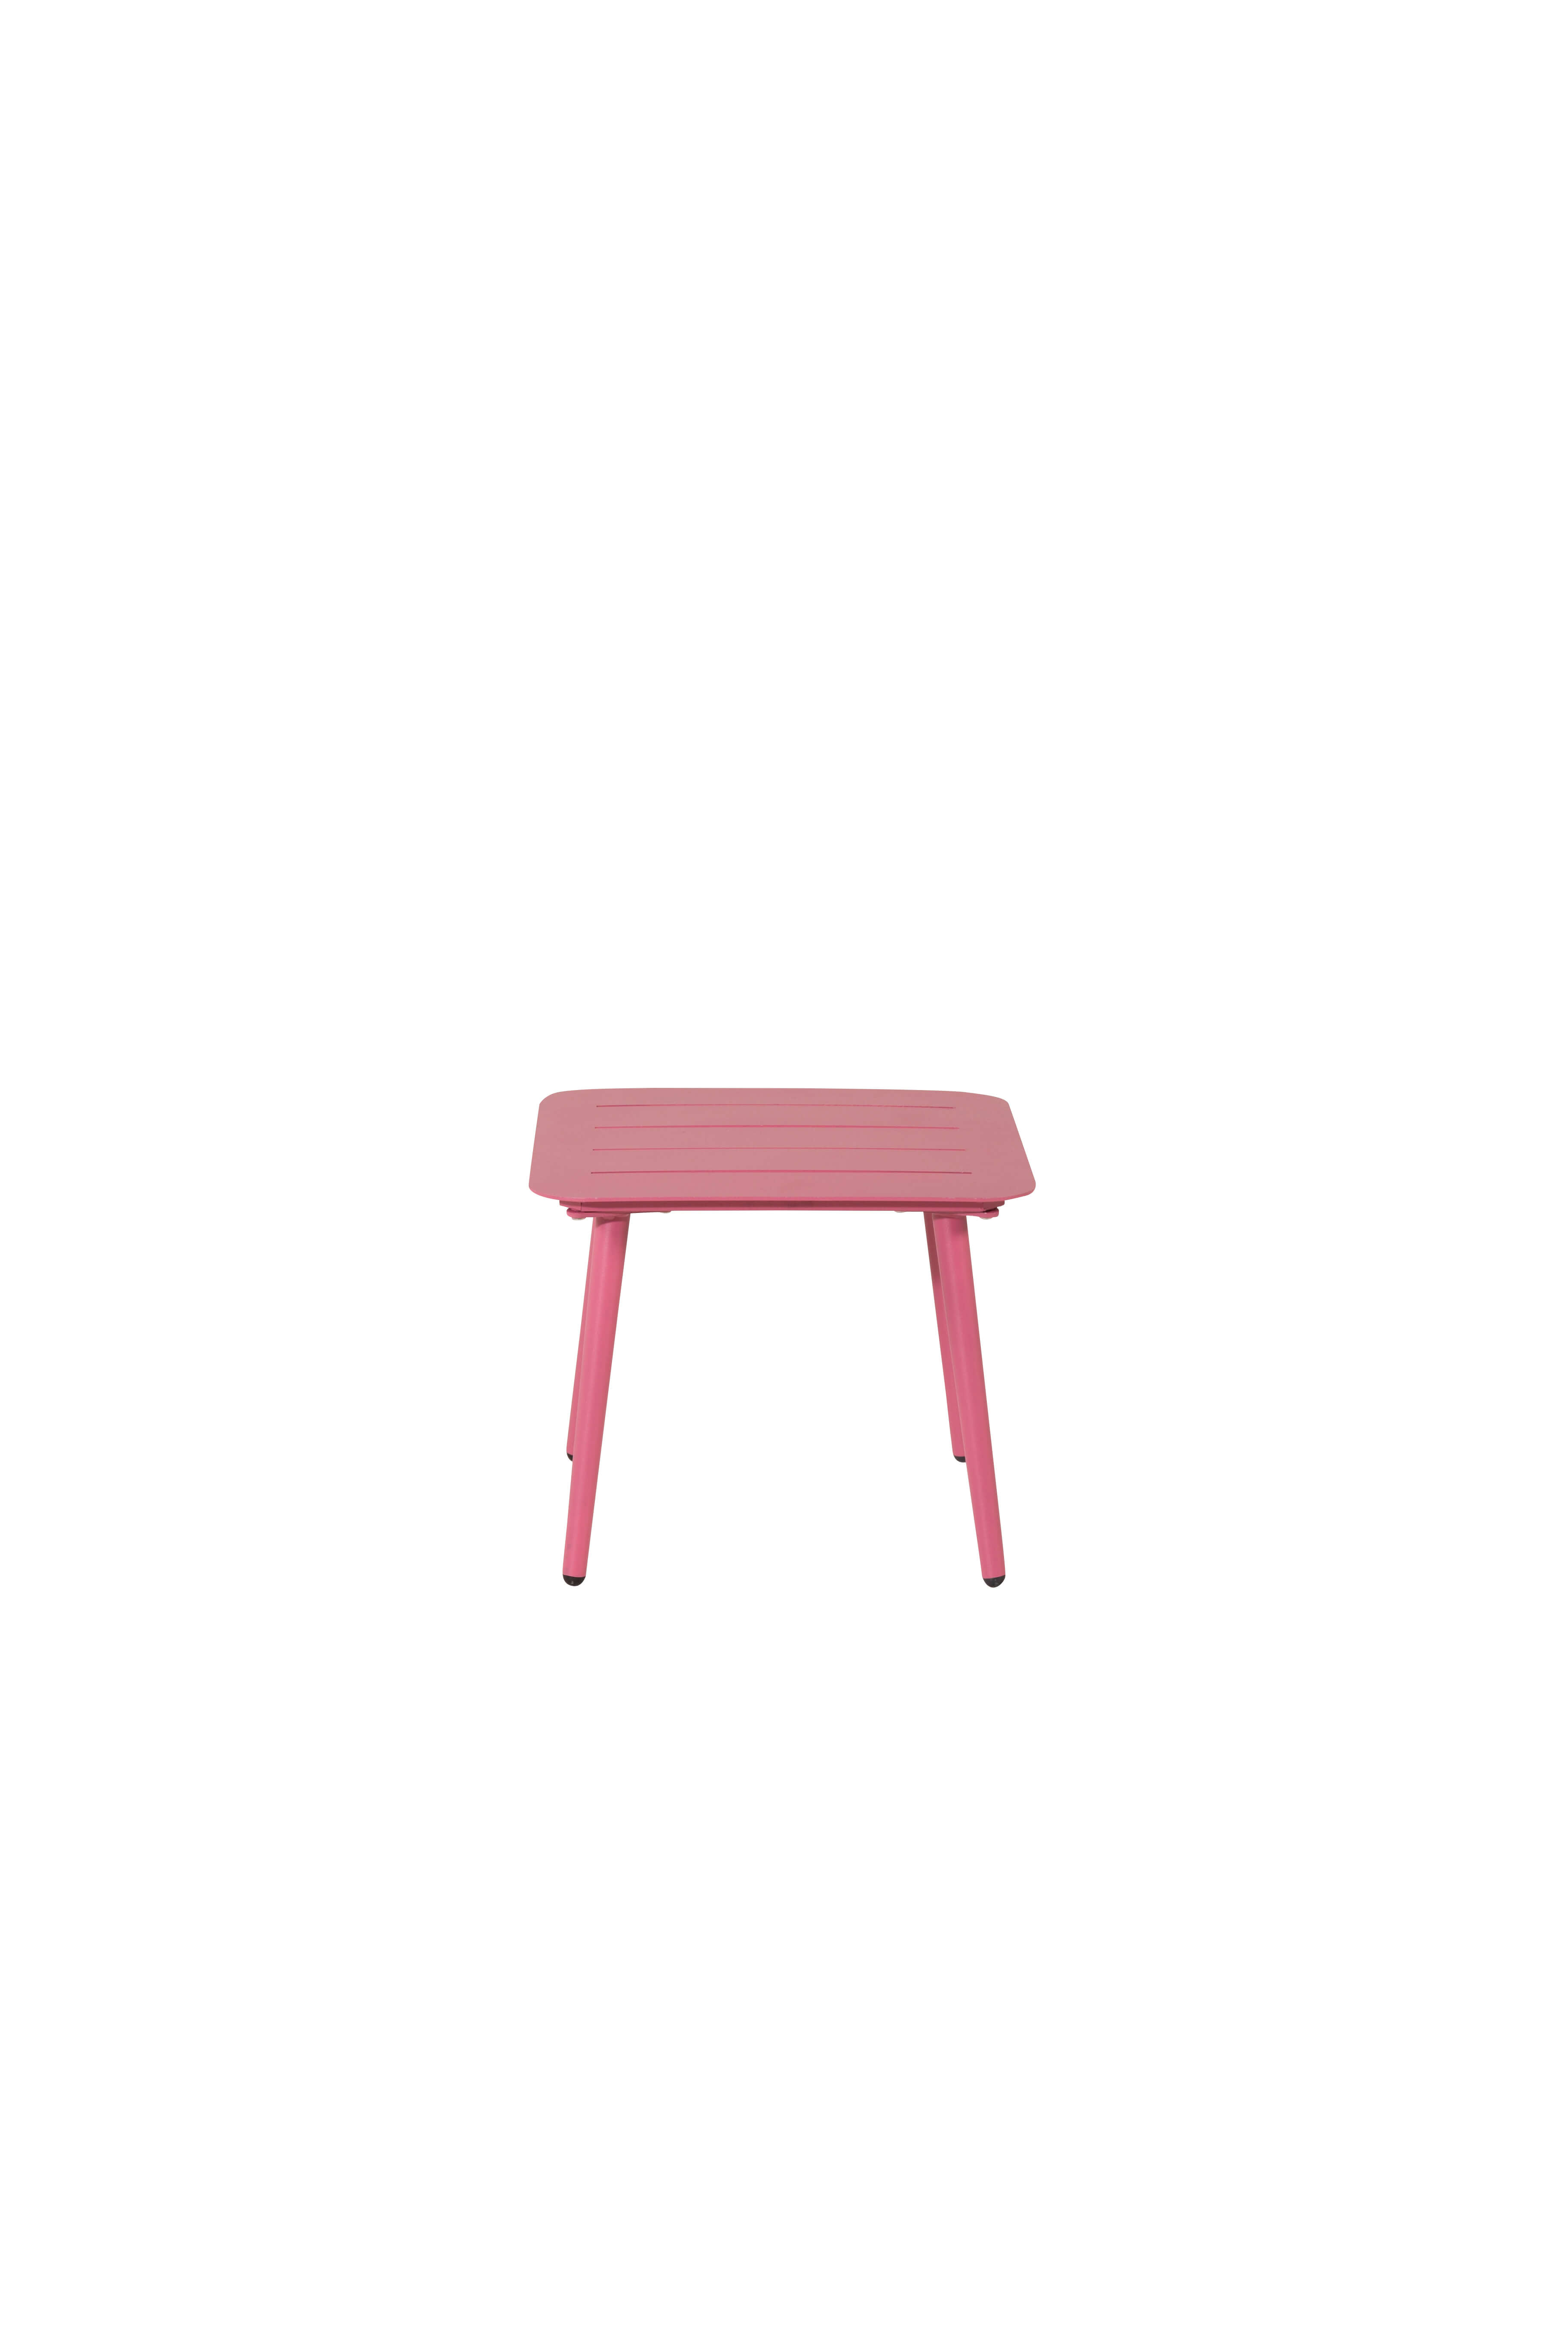 VENTURE DESIGN Lina havebord - pink stål (40x40)